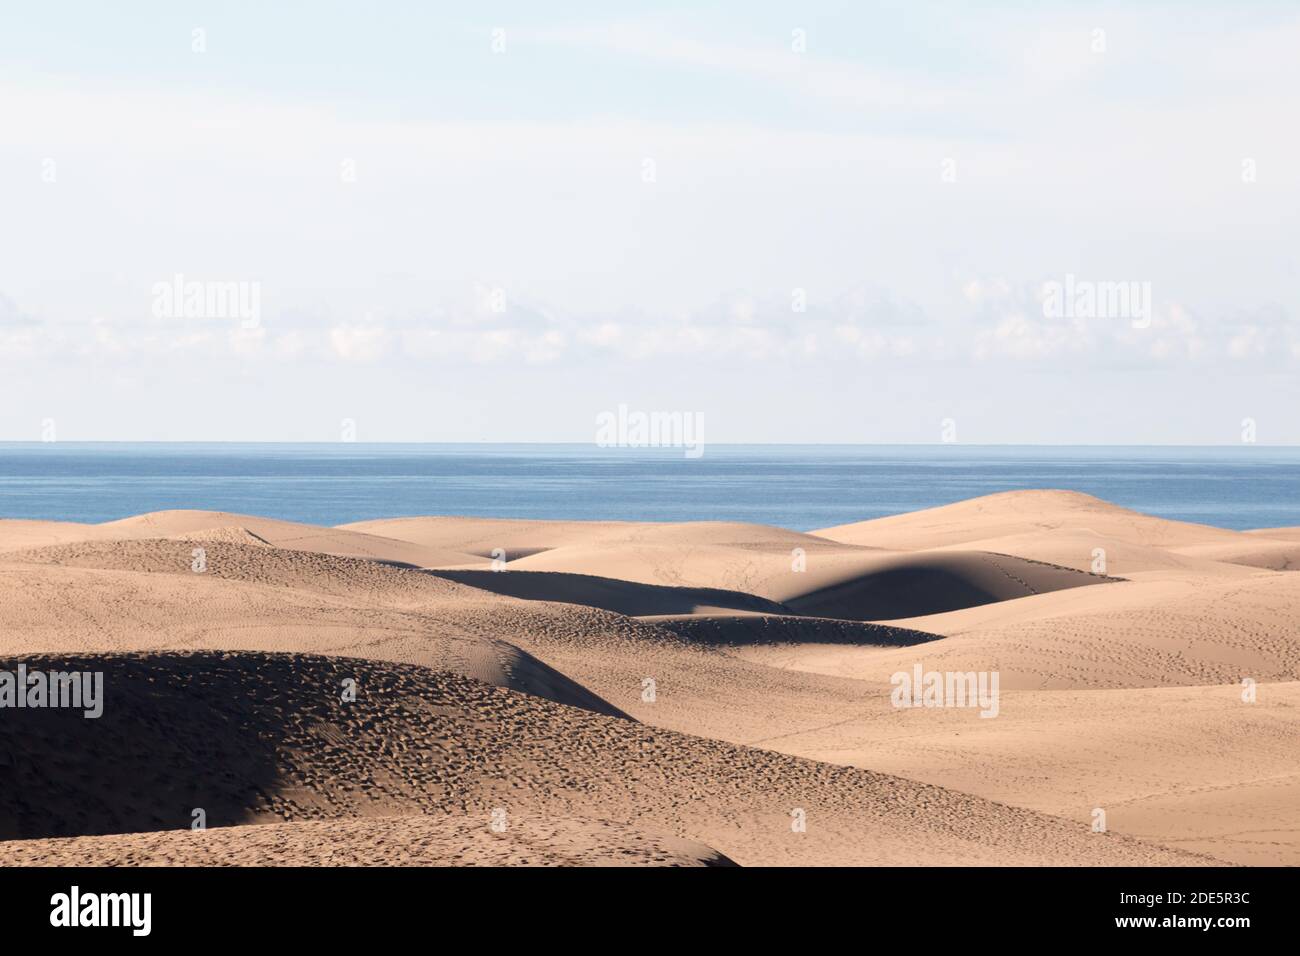 View of Maspalomas Dunes in Playa del Ingles, Maspalomas, Gran Canaria, Spain. Stock Photo